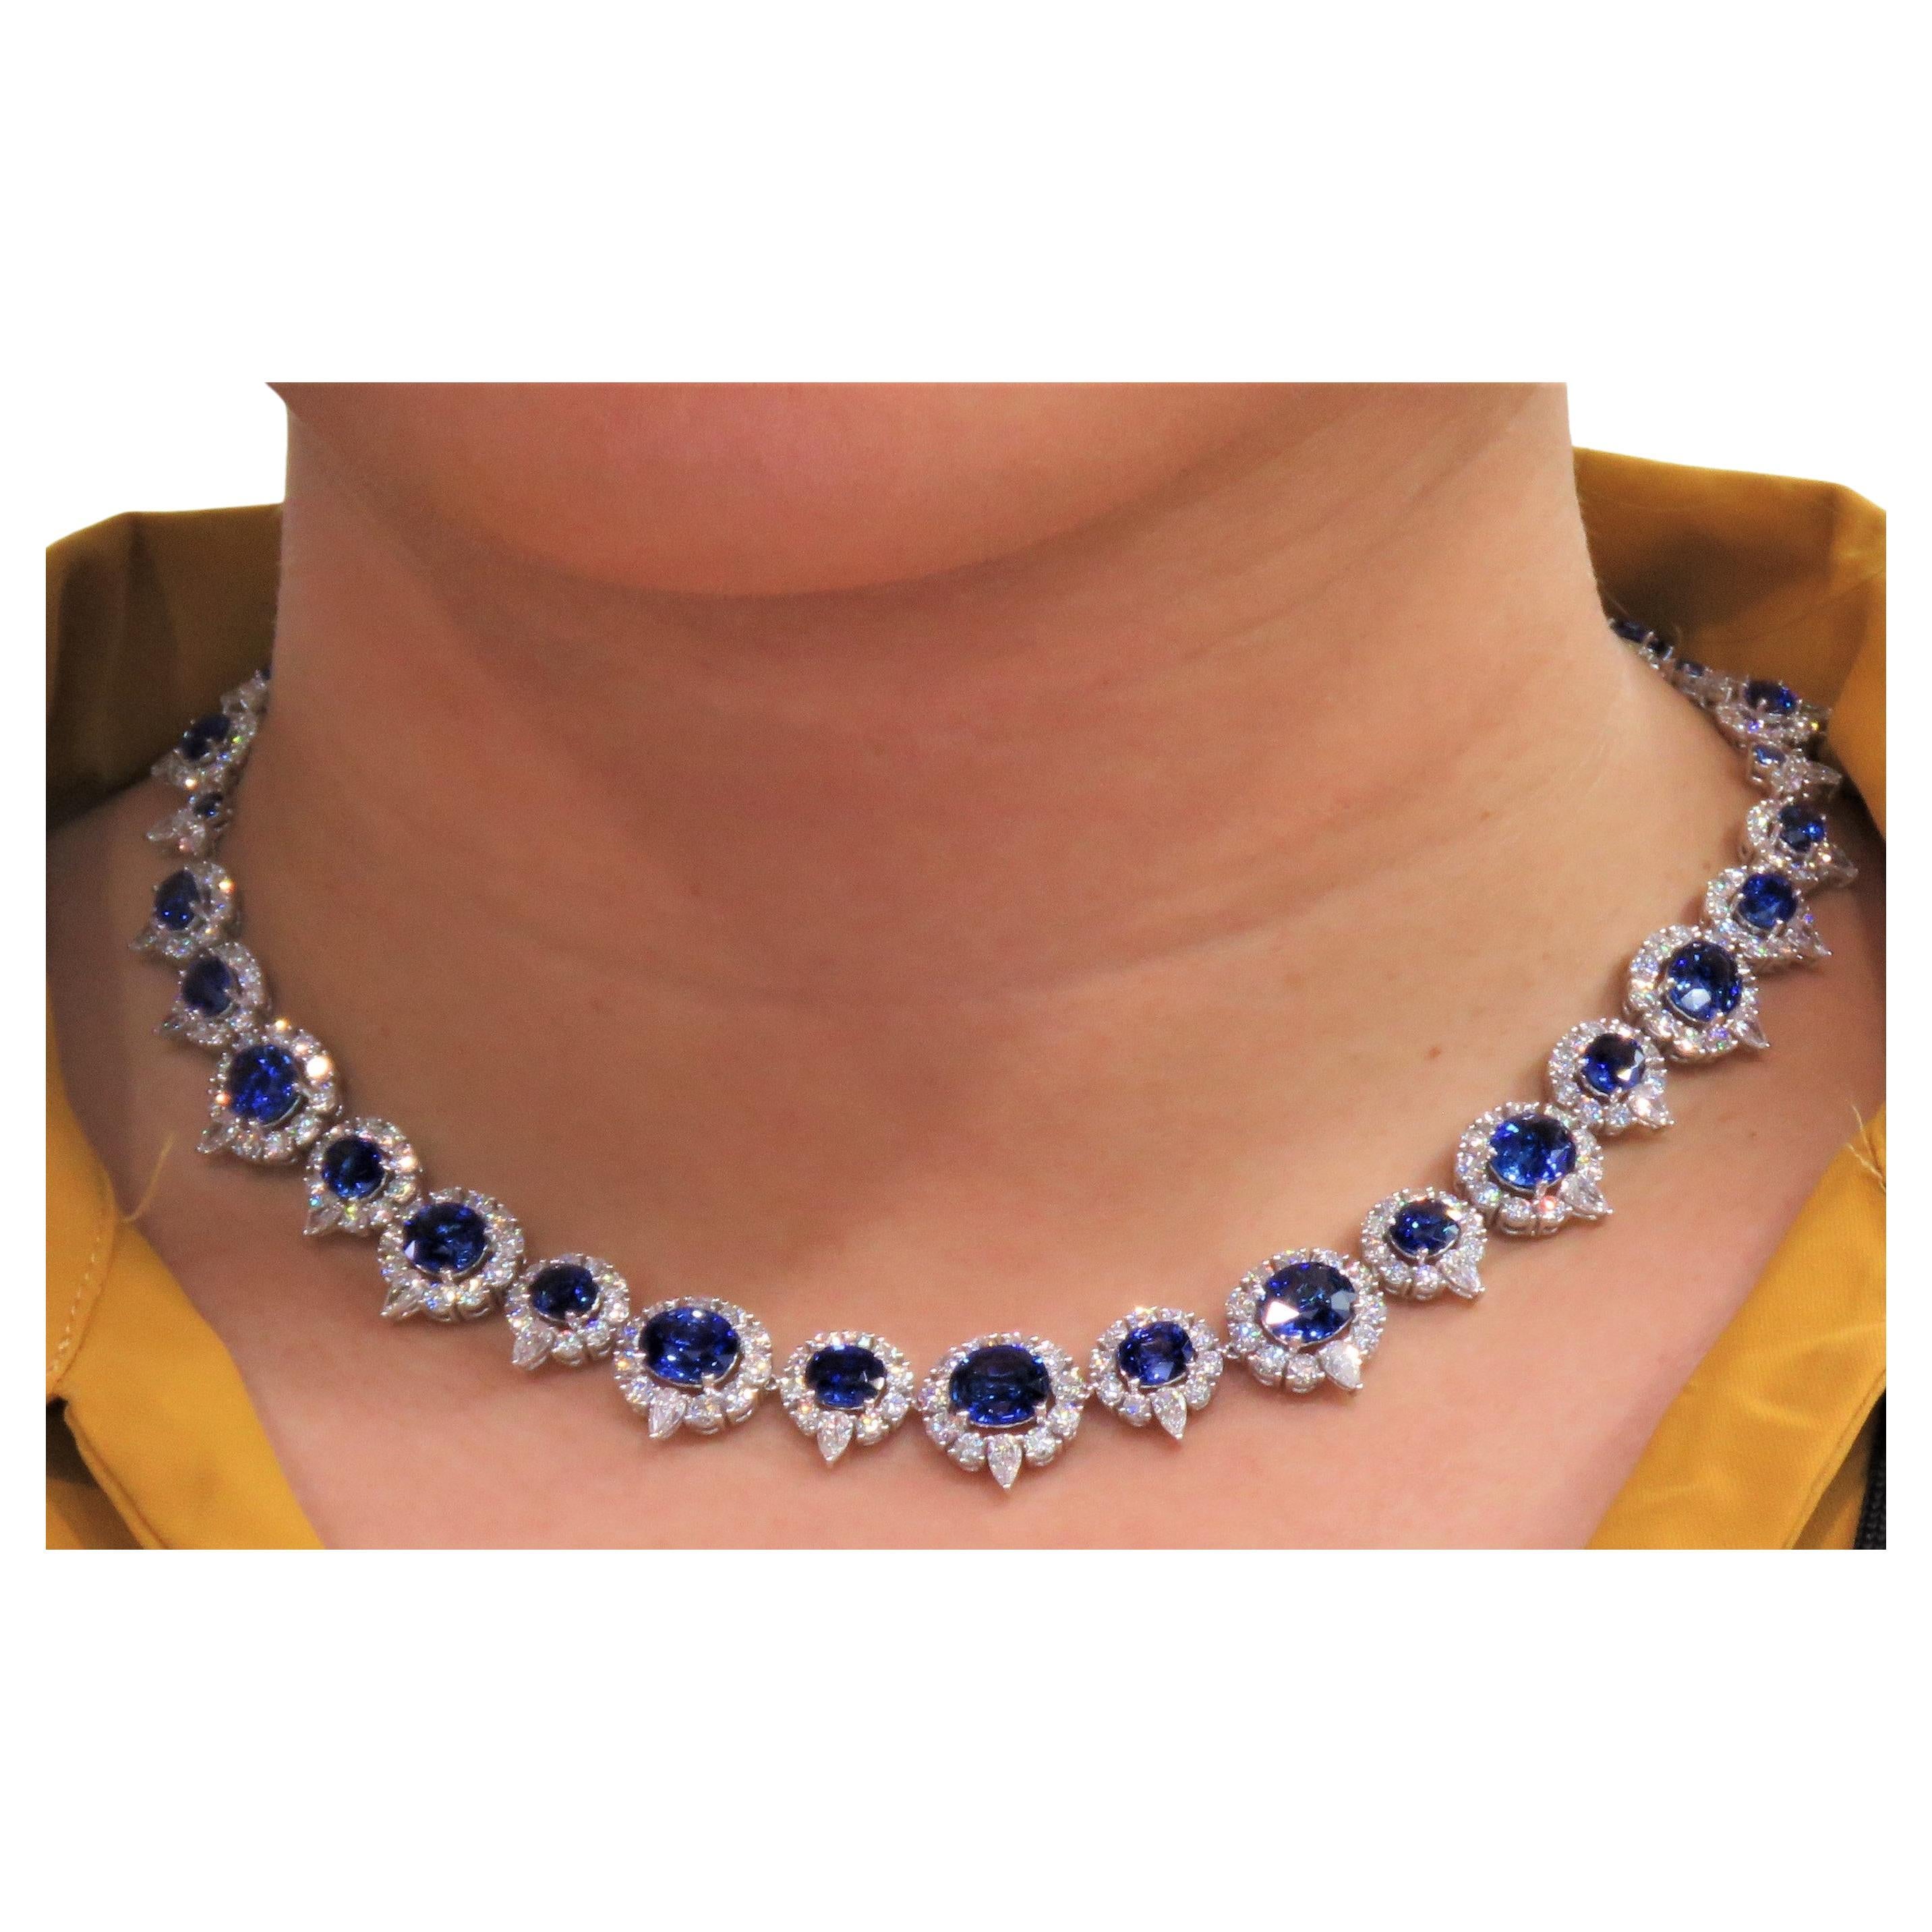 Rare NWT $352, 000 GIA Certified 52 Carat Ceylon Blue Sapphire Diamond Necklace